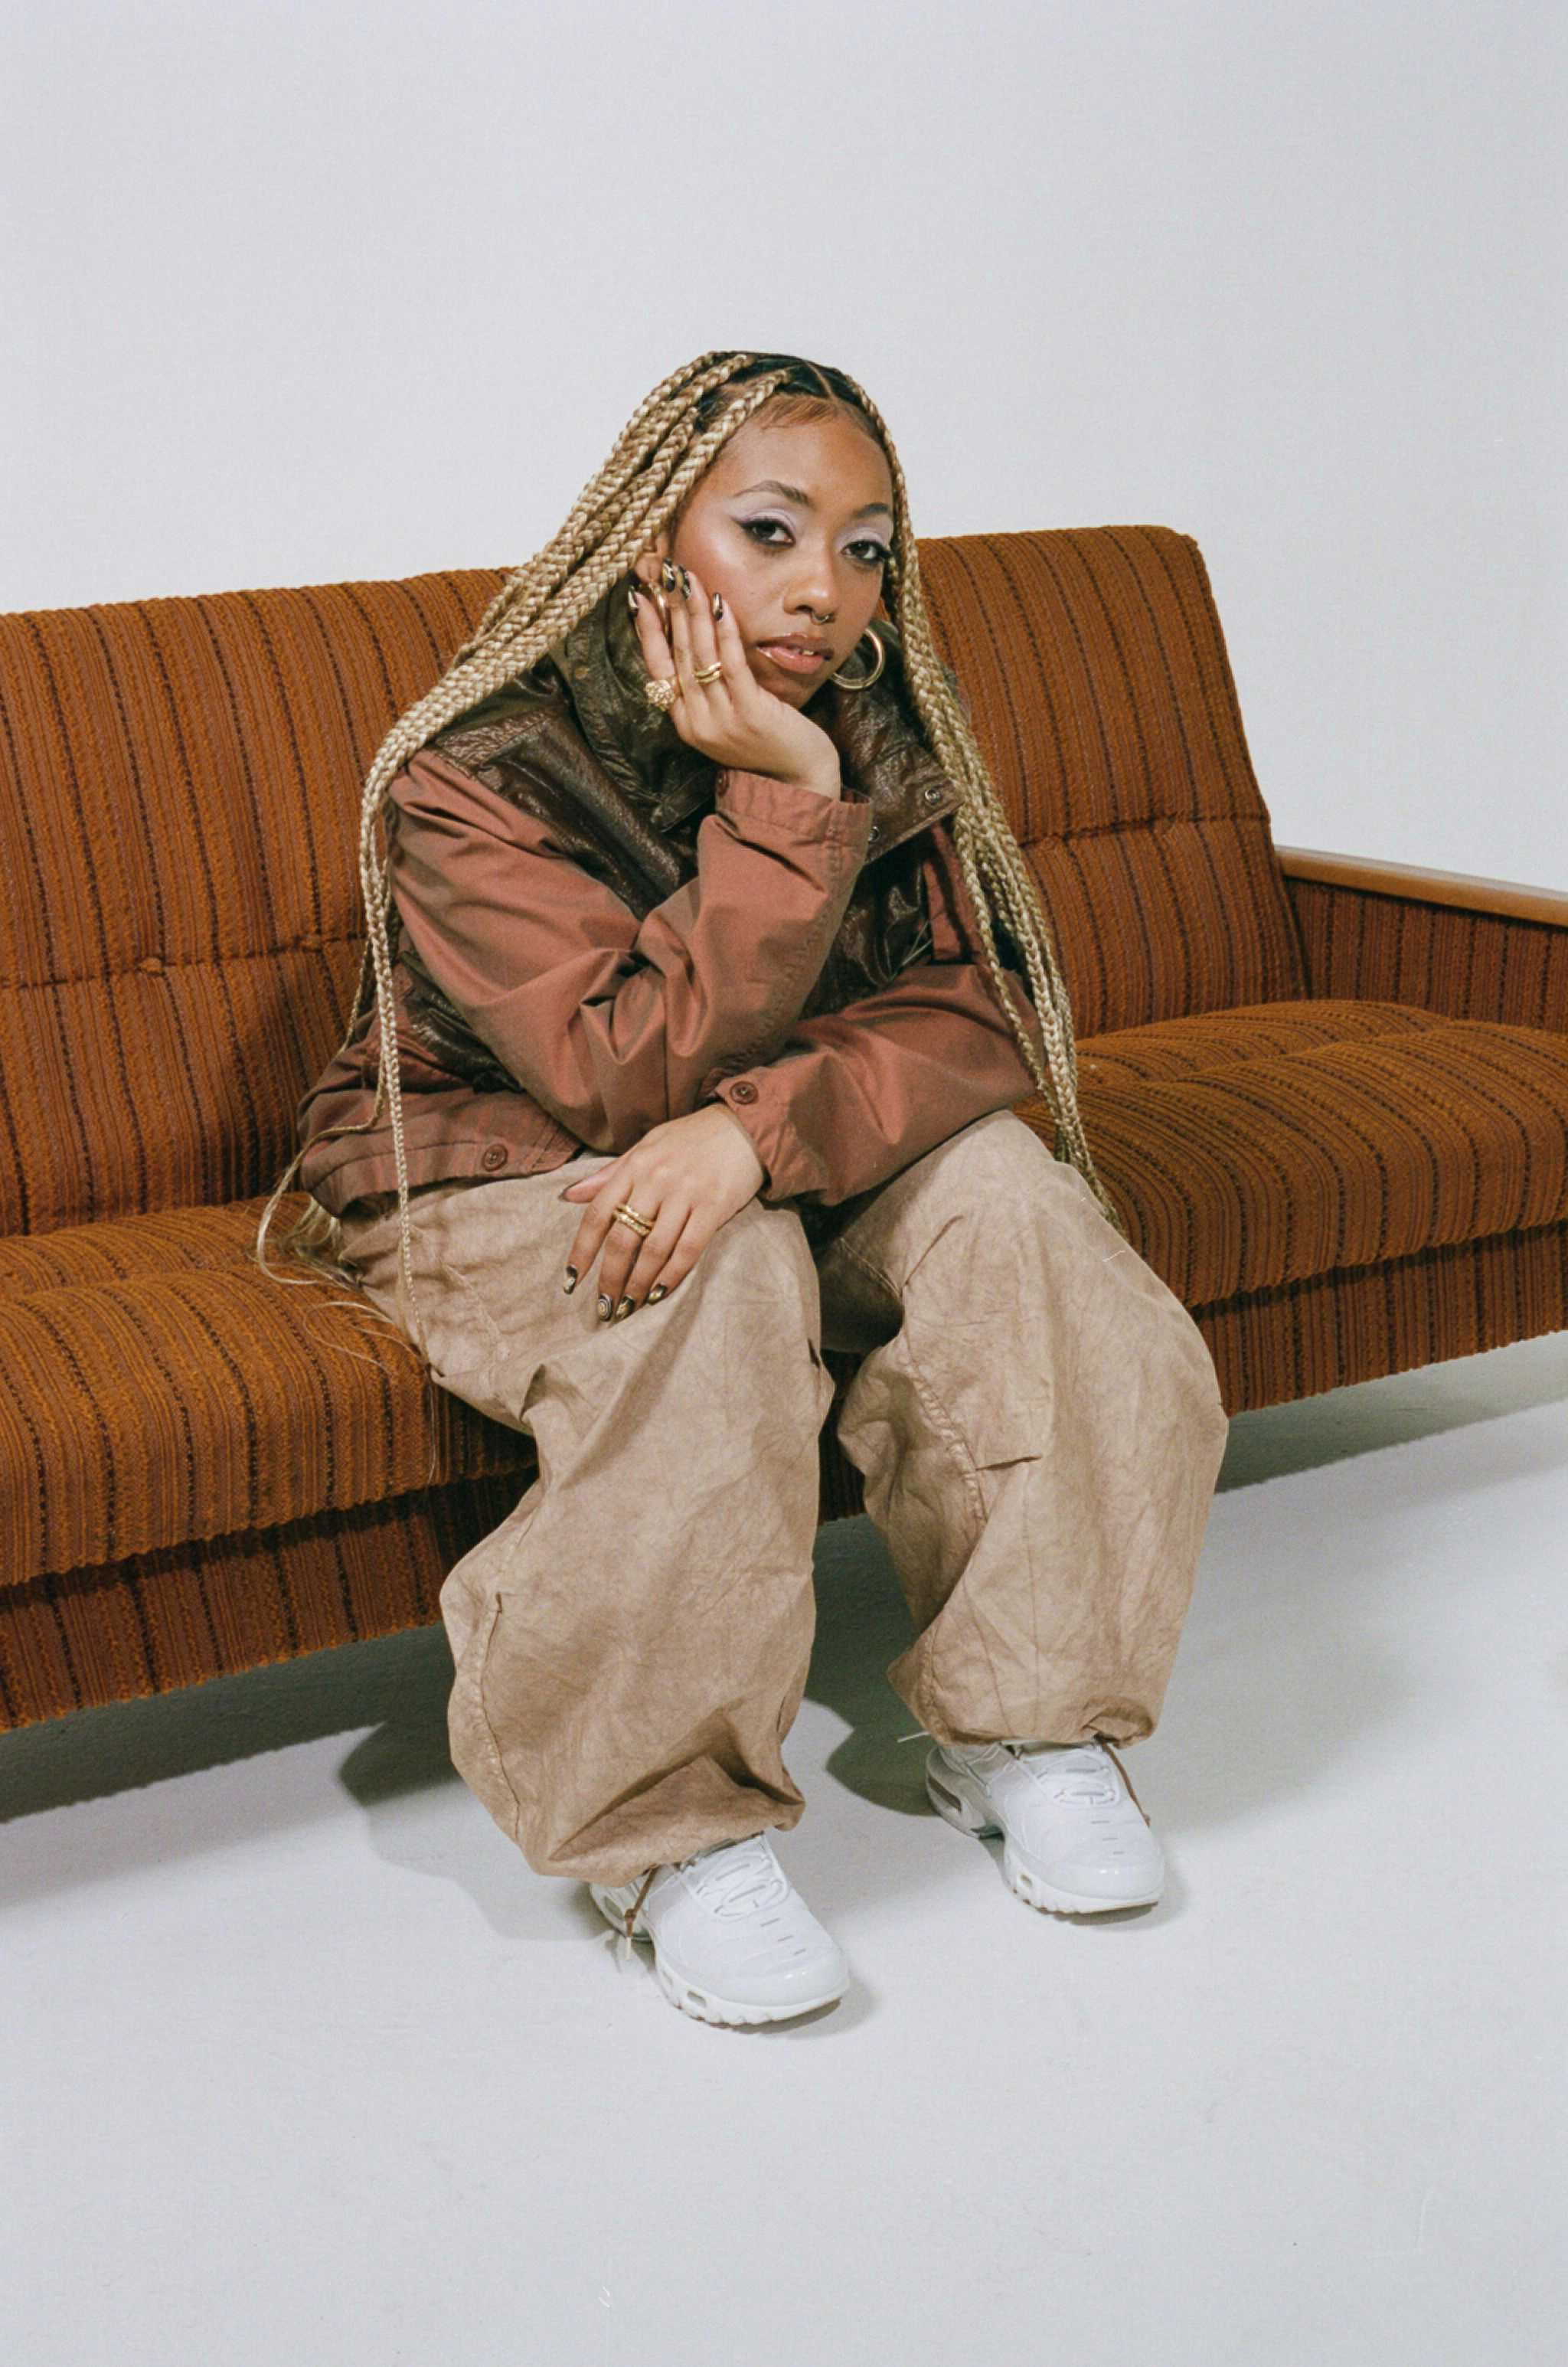 Bilde av artisten Nia Archives som sitter på en brun 70-tallssofa